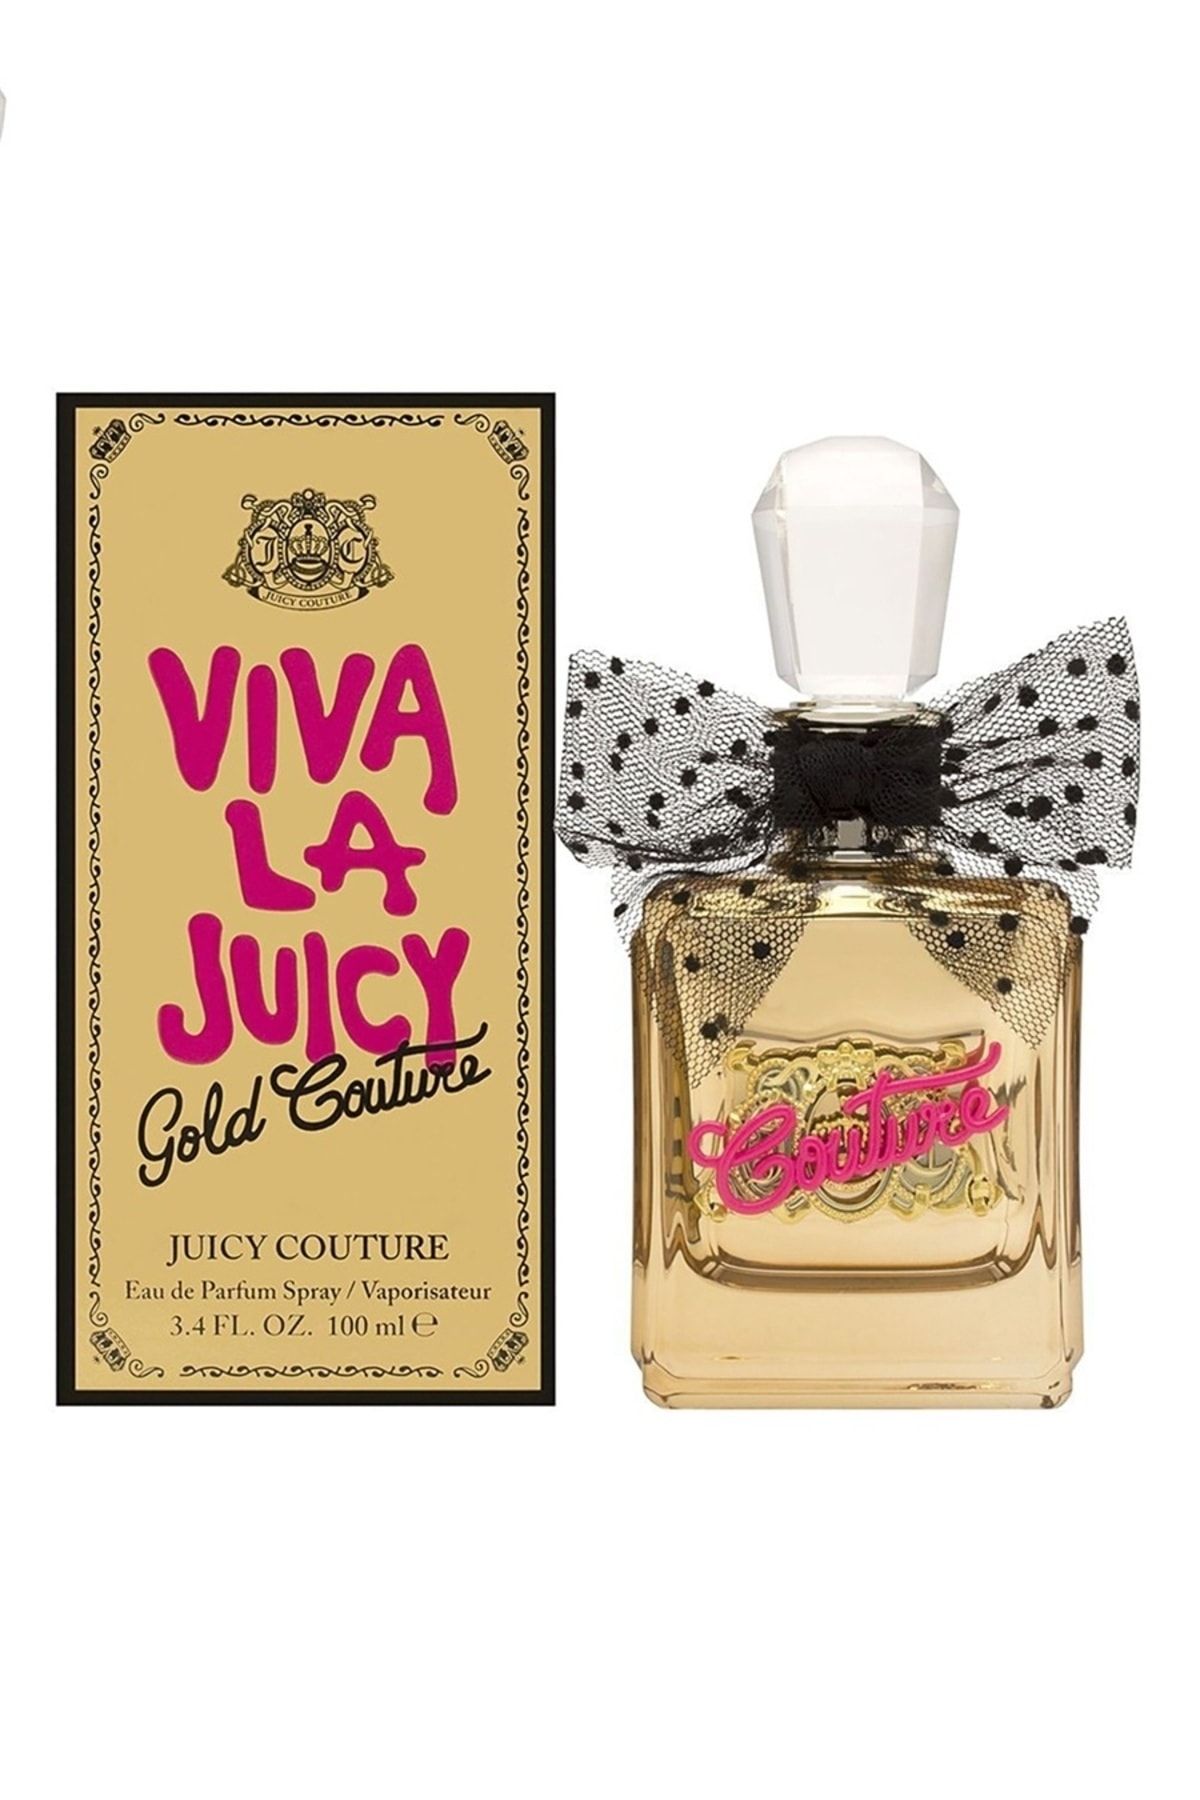 Juicy Couture Vıva La Juicy Gold Couture ادوپرفیوم 100 ml